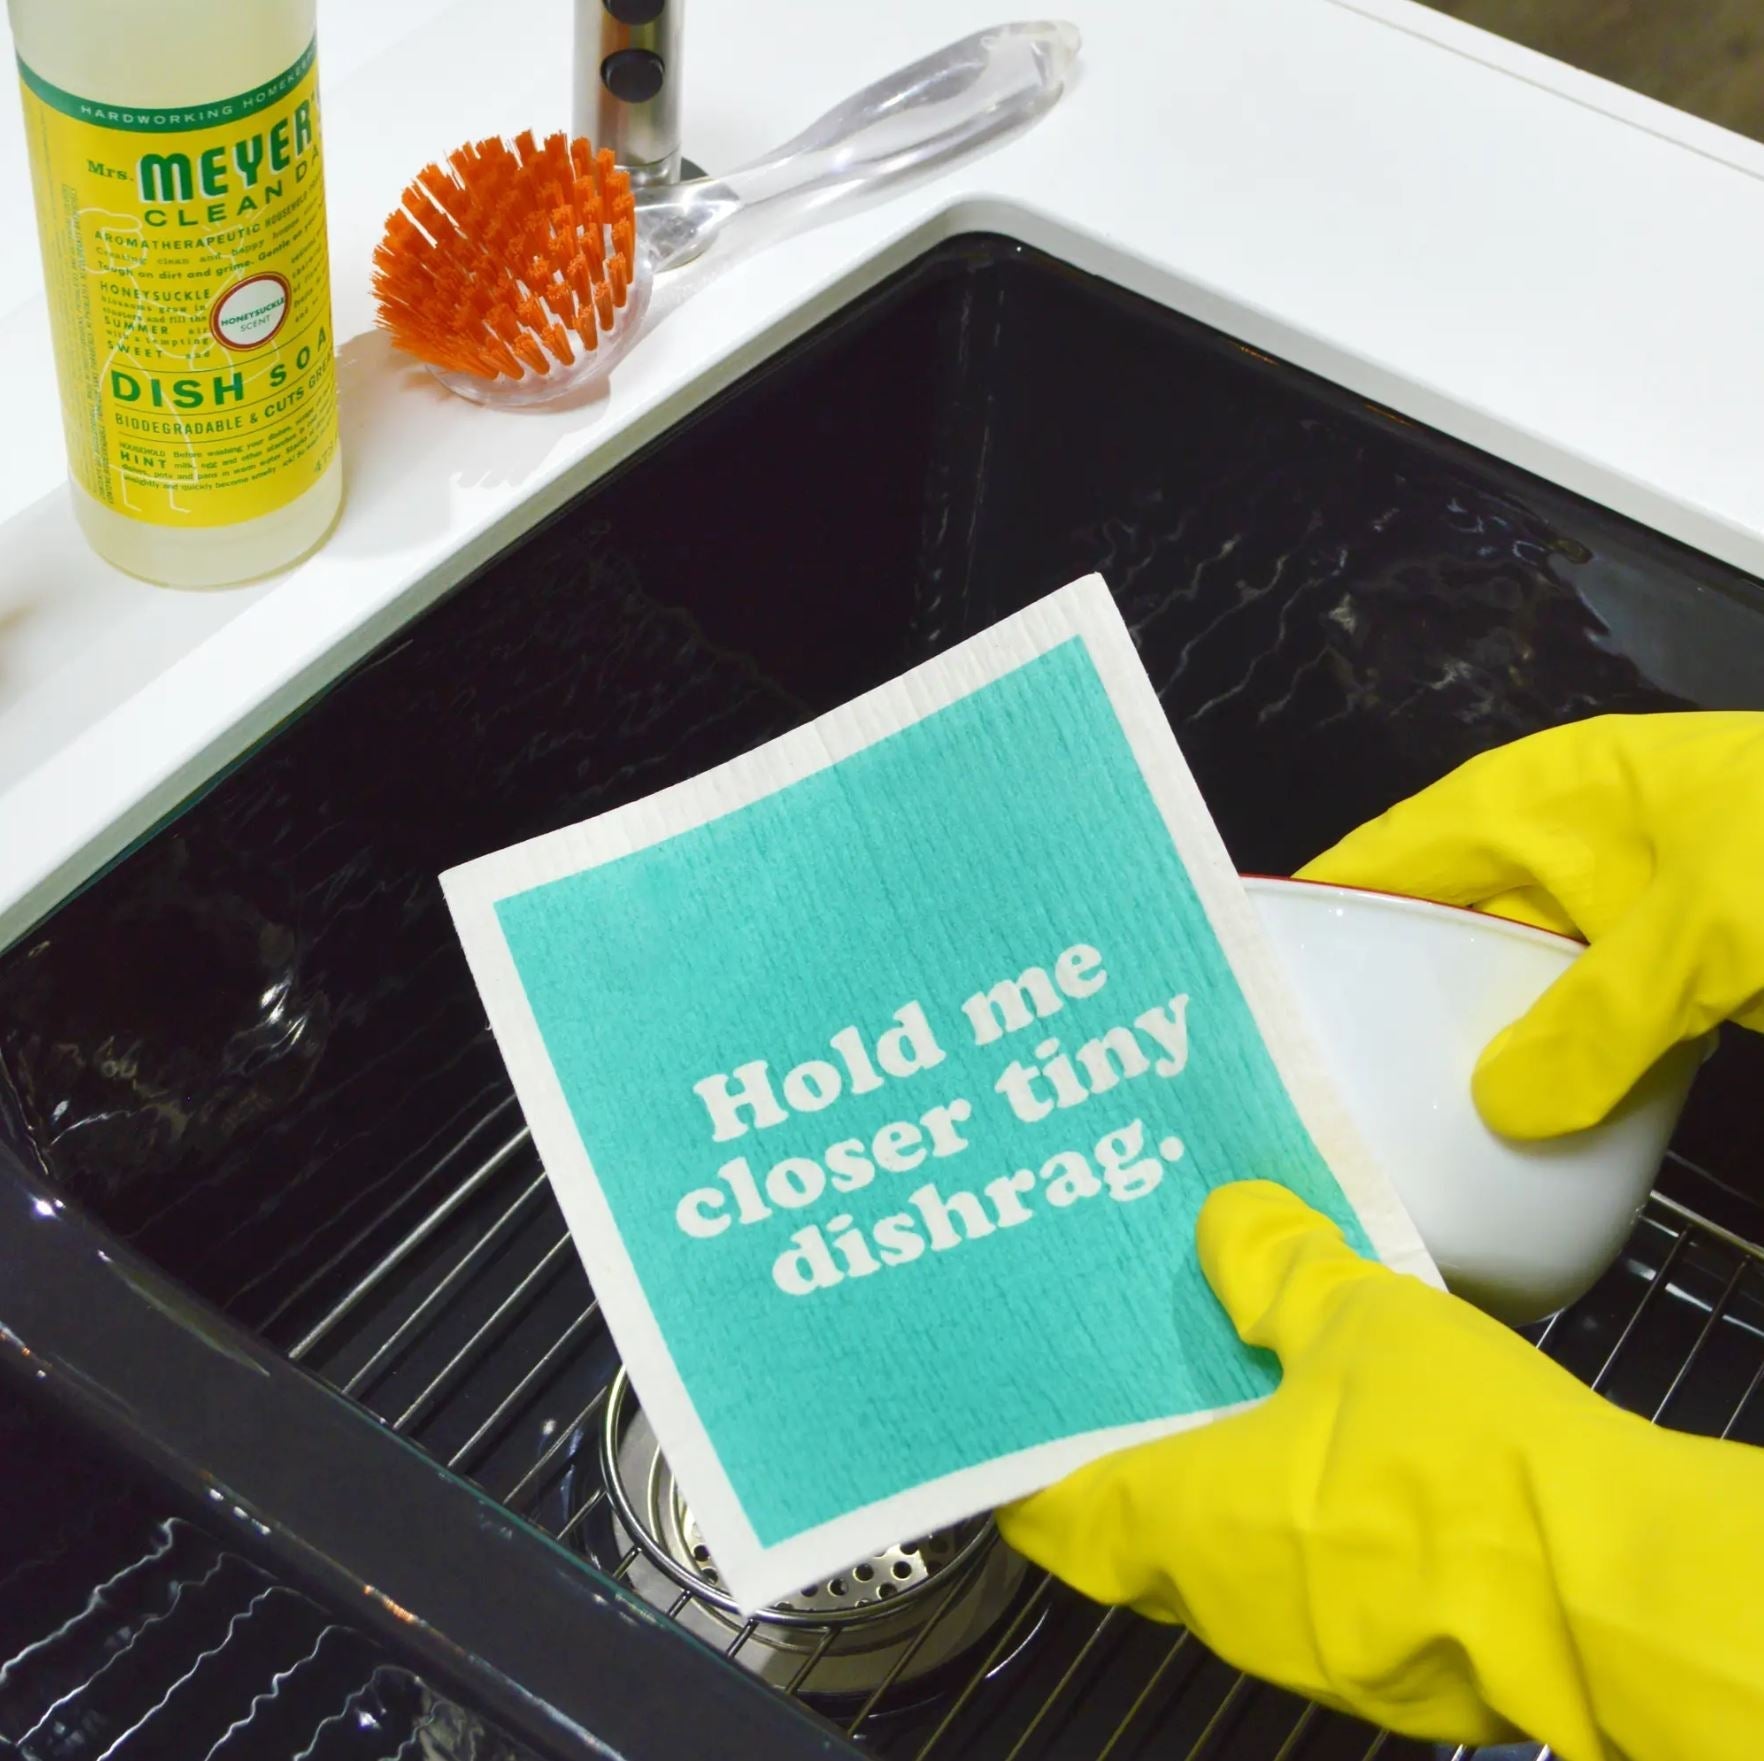 Clean Me Baby Swedish Dishcloth